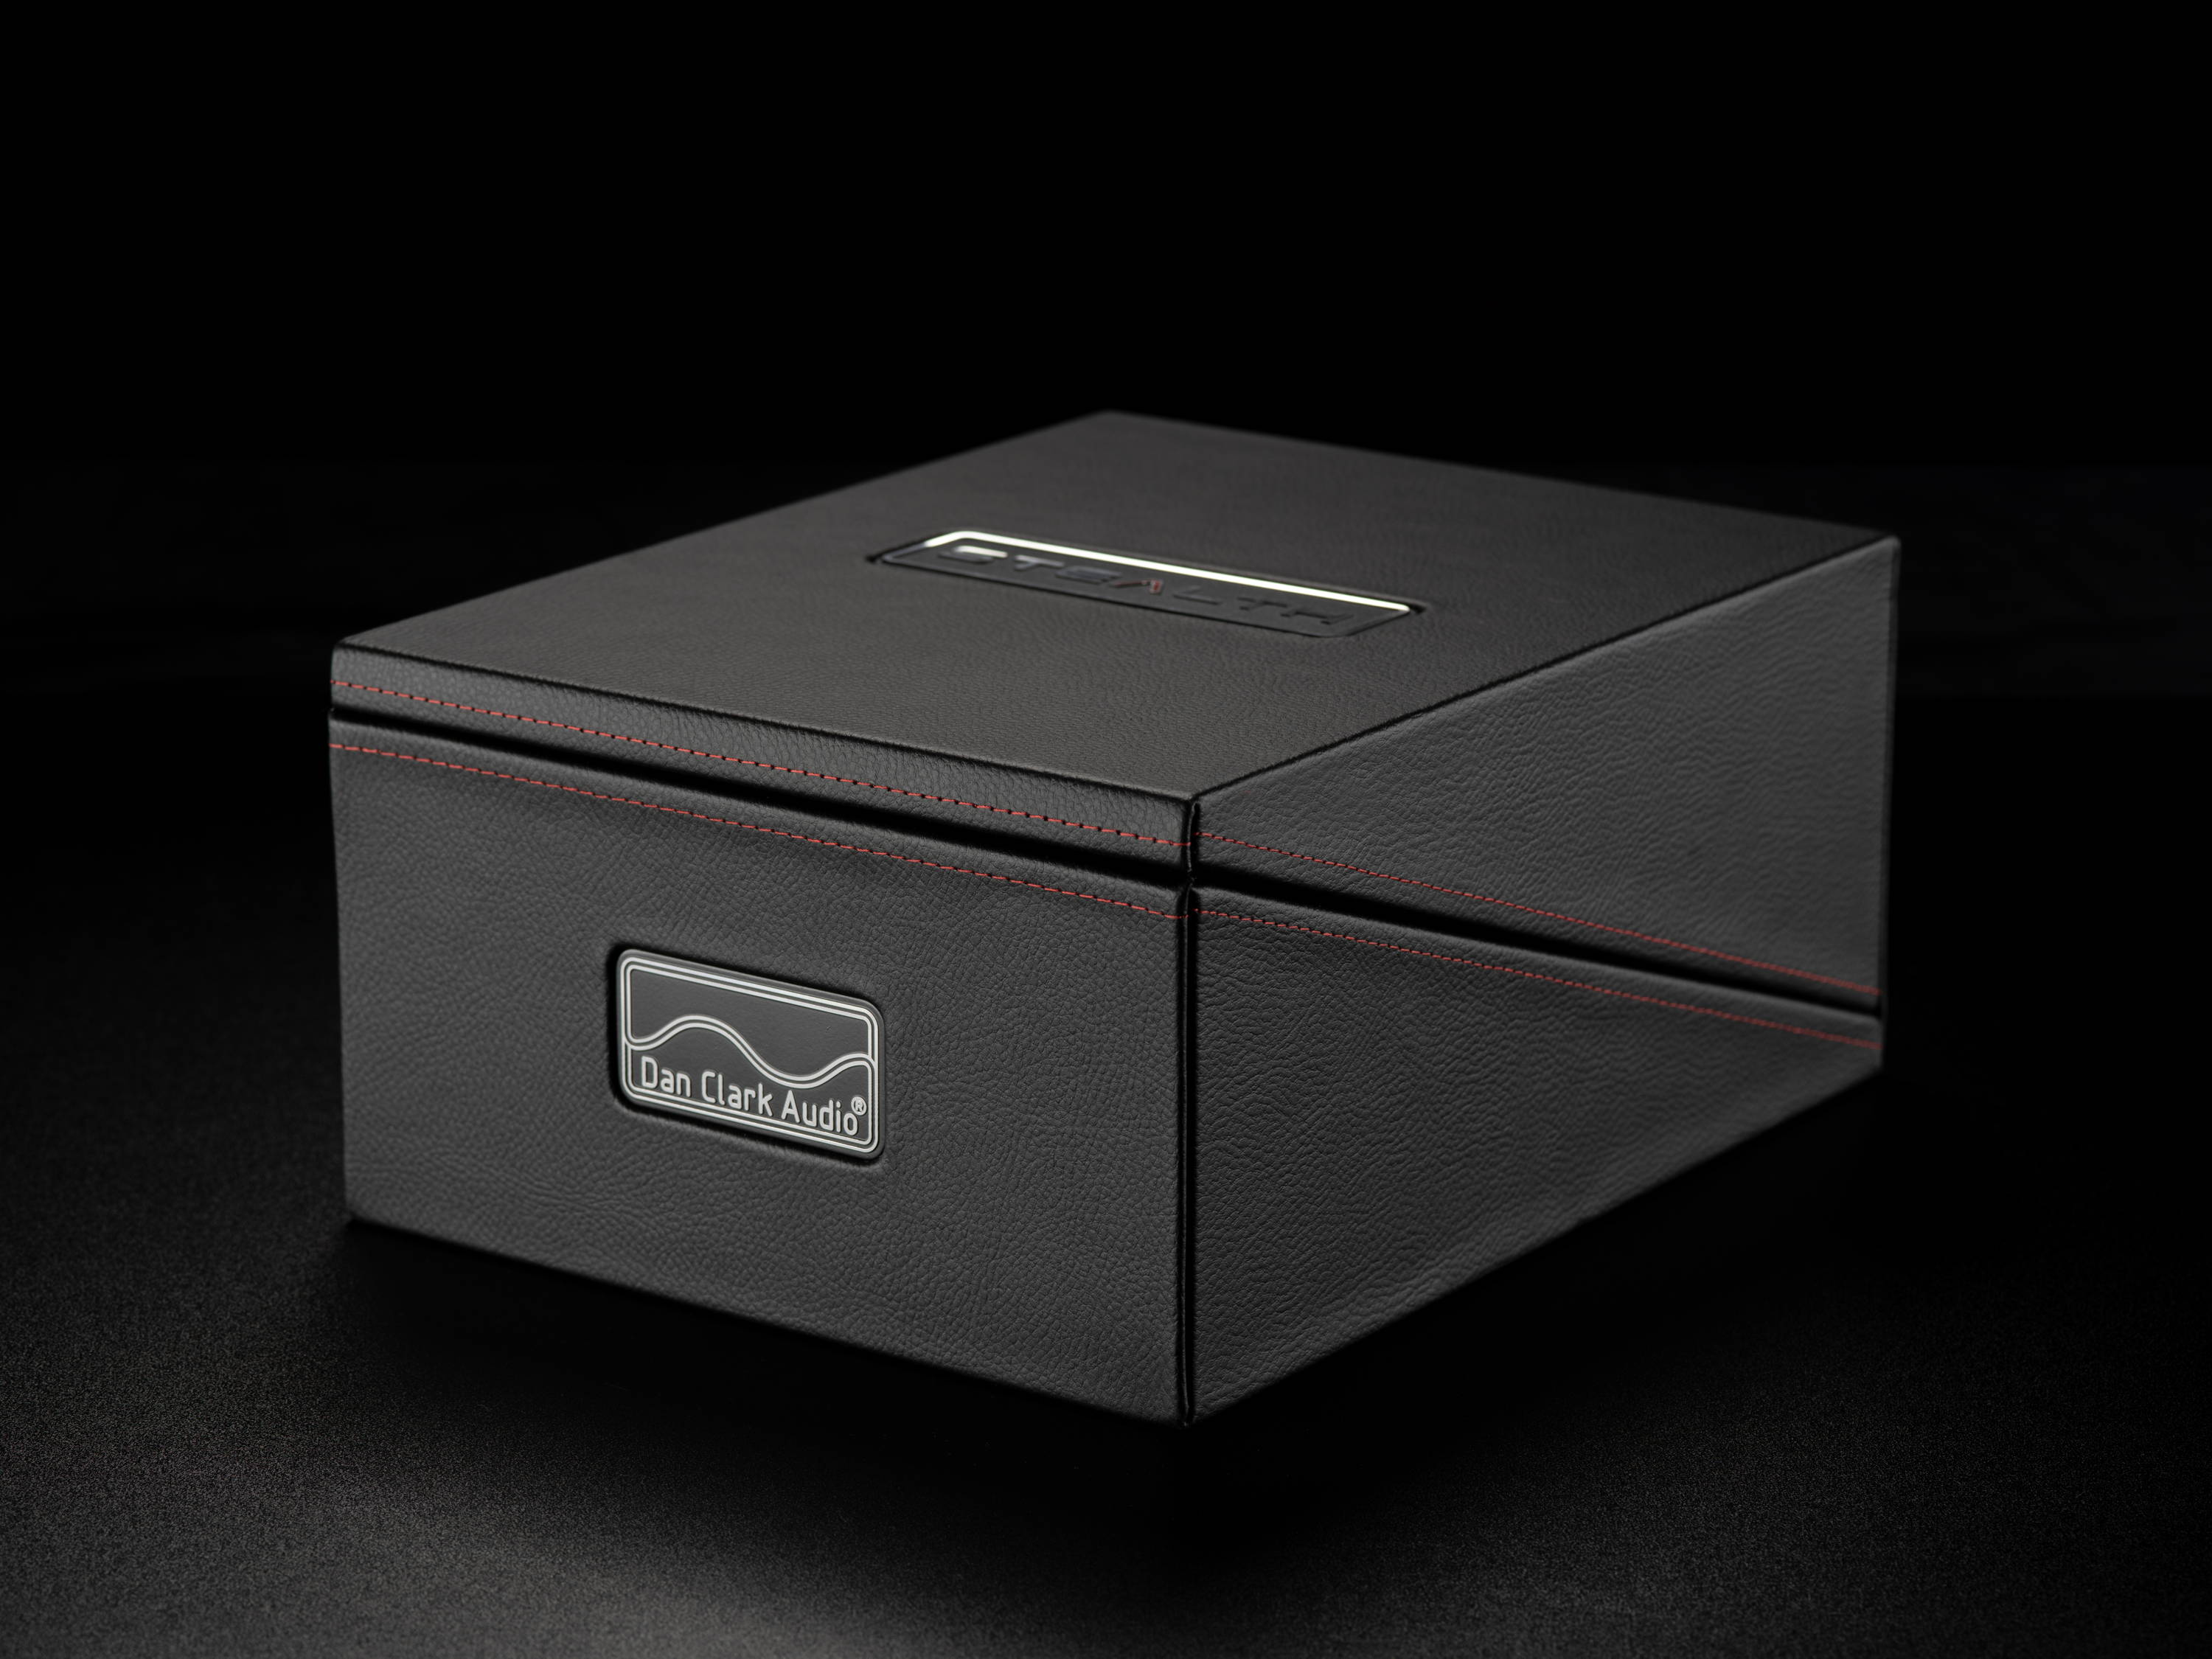 Storage box for Dan Clark Audio Stealth headphone